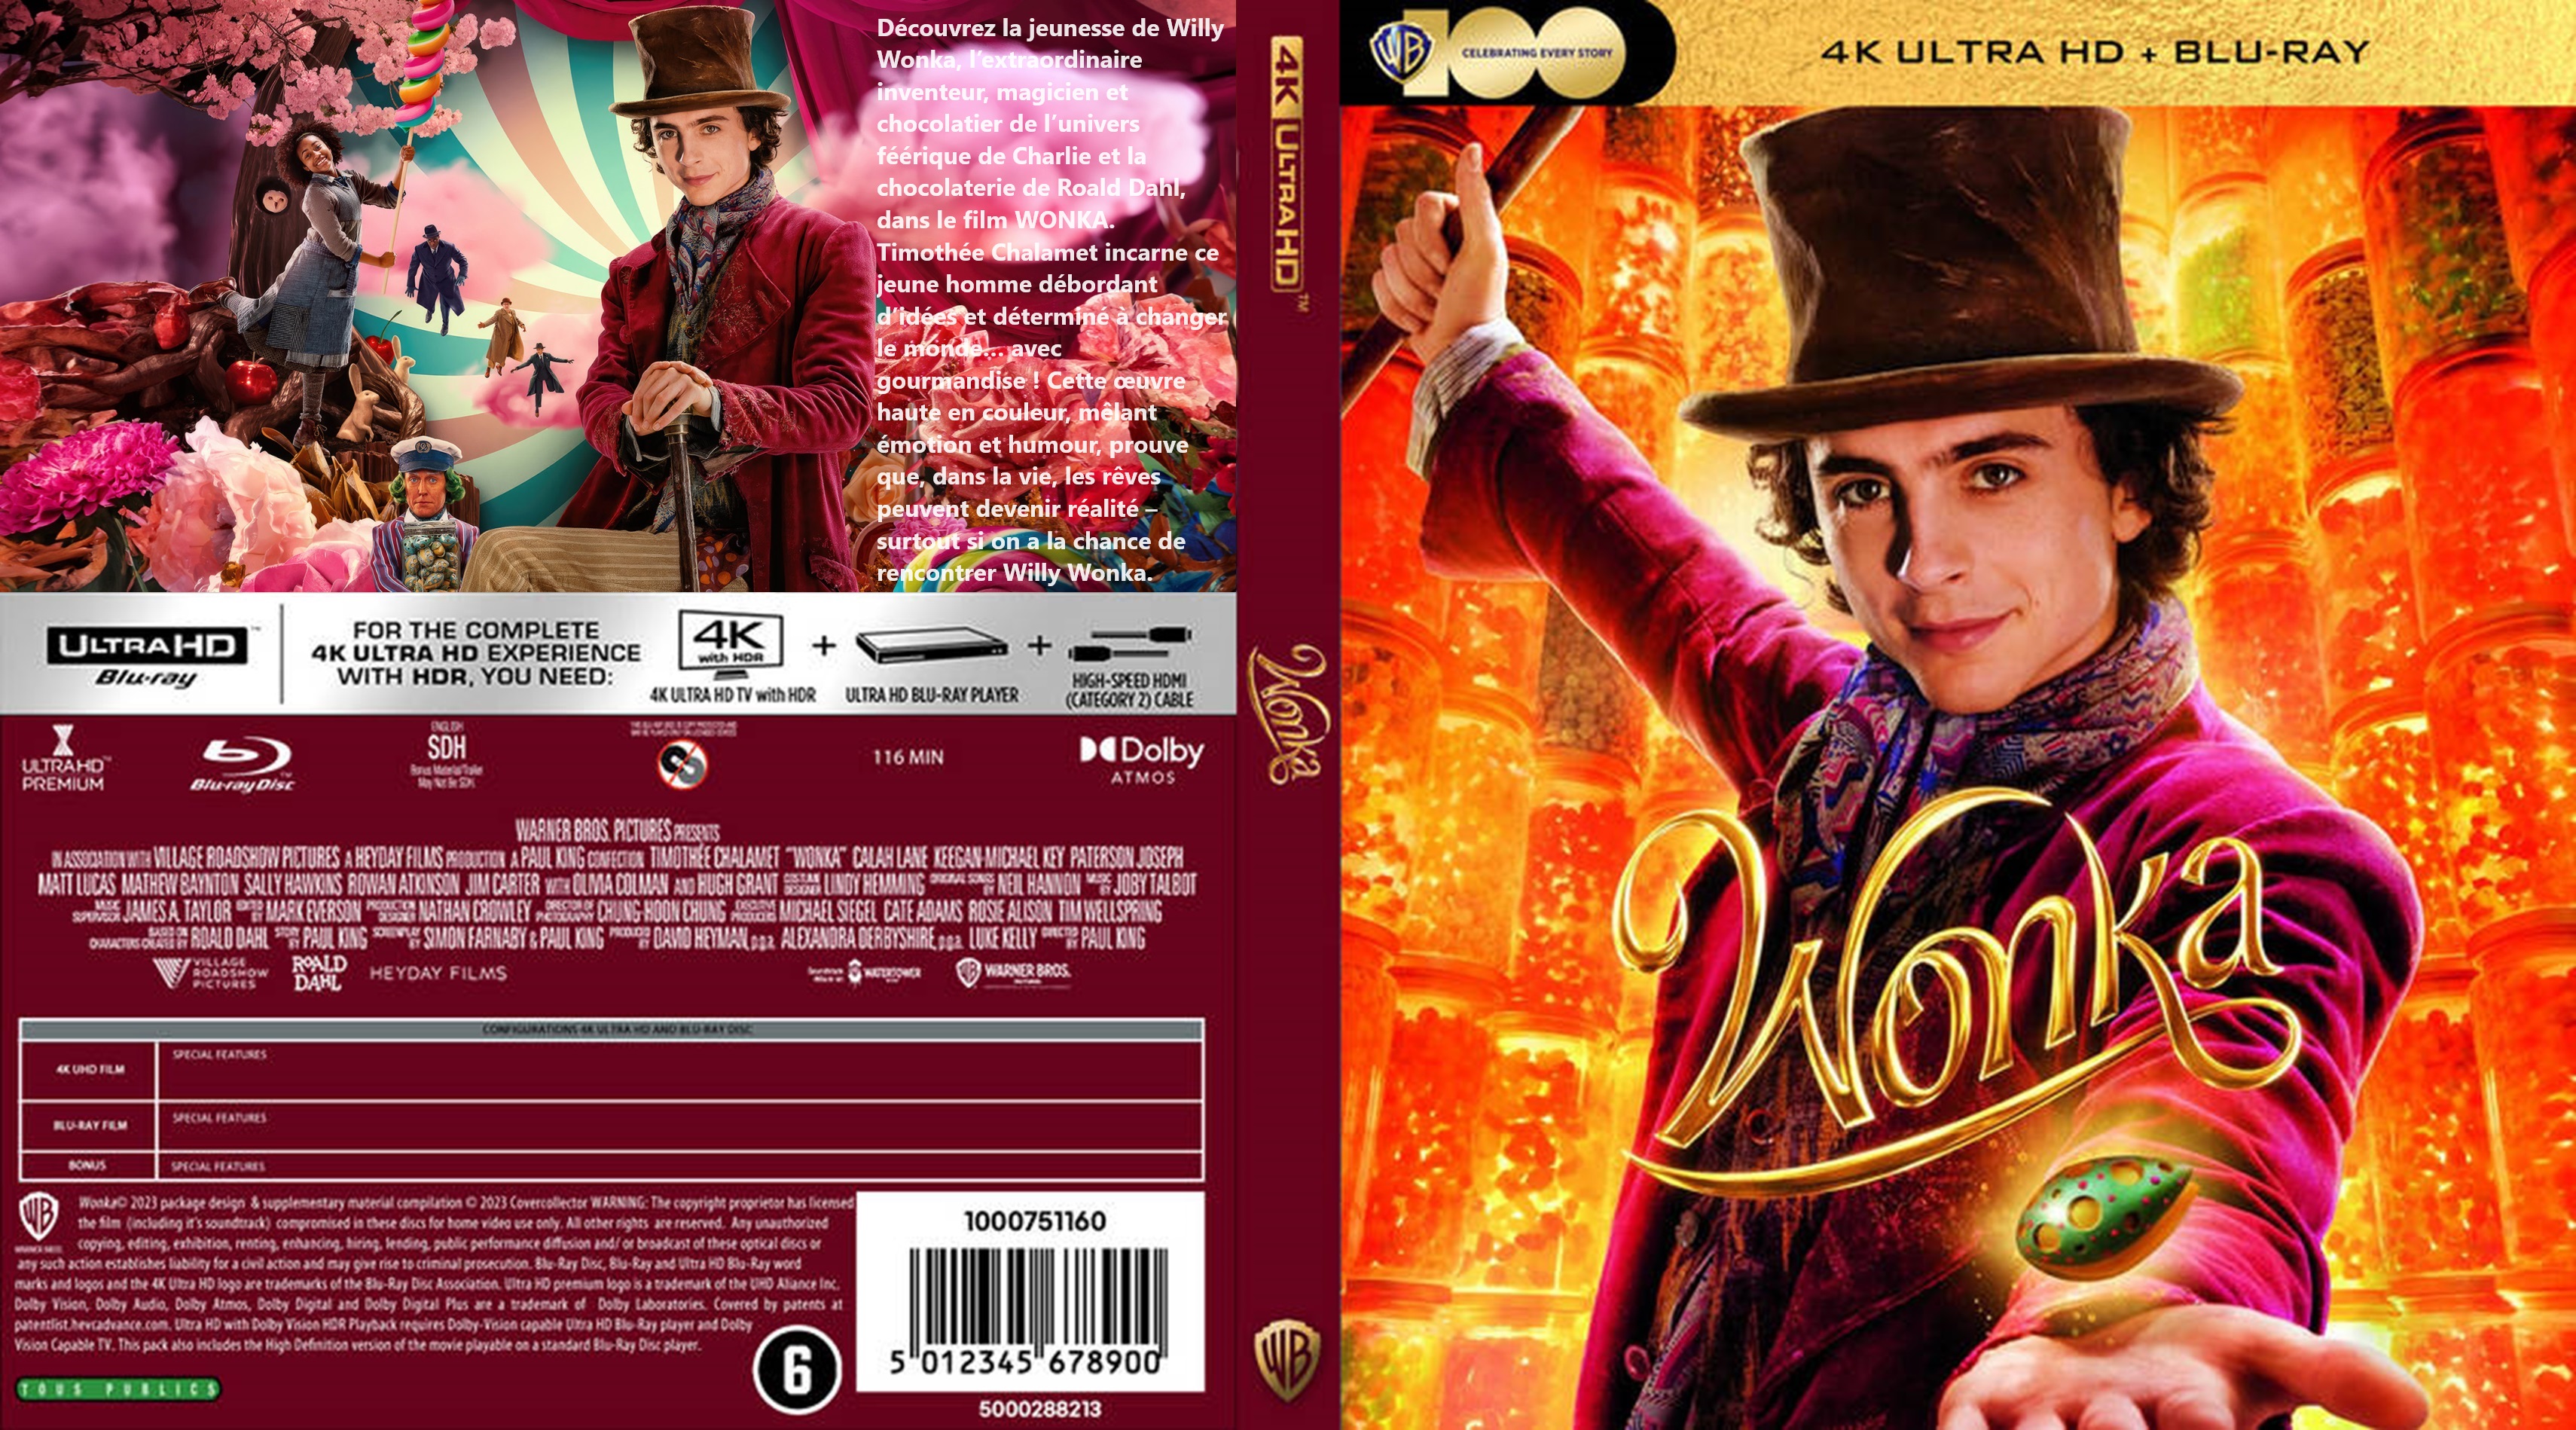 Jaquette DVD Wonka 4k blu ray custom